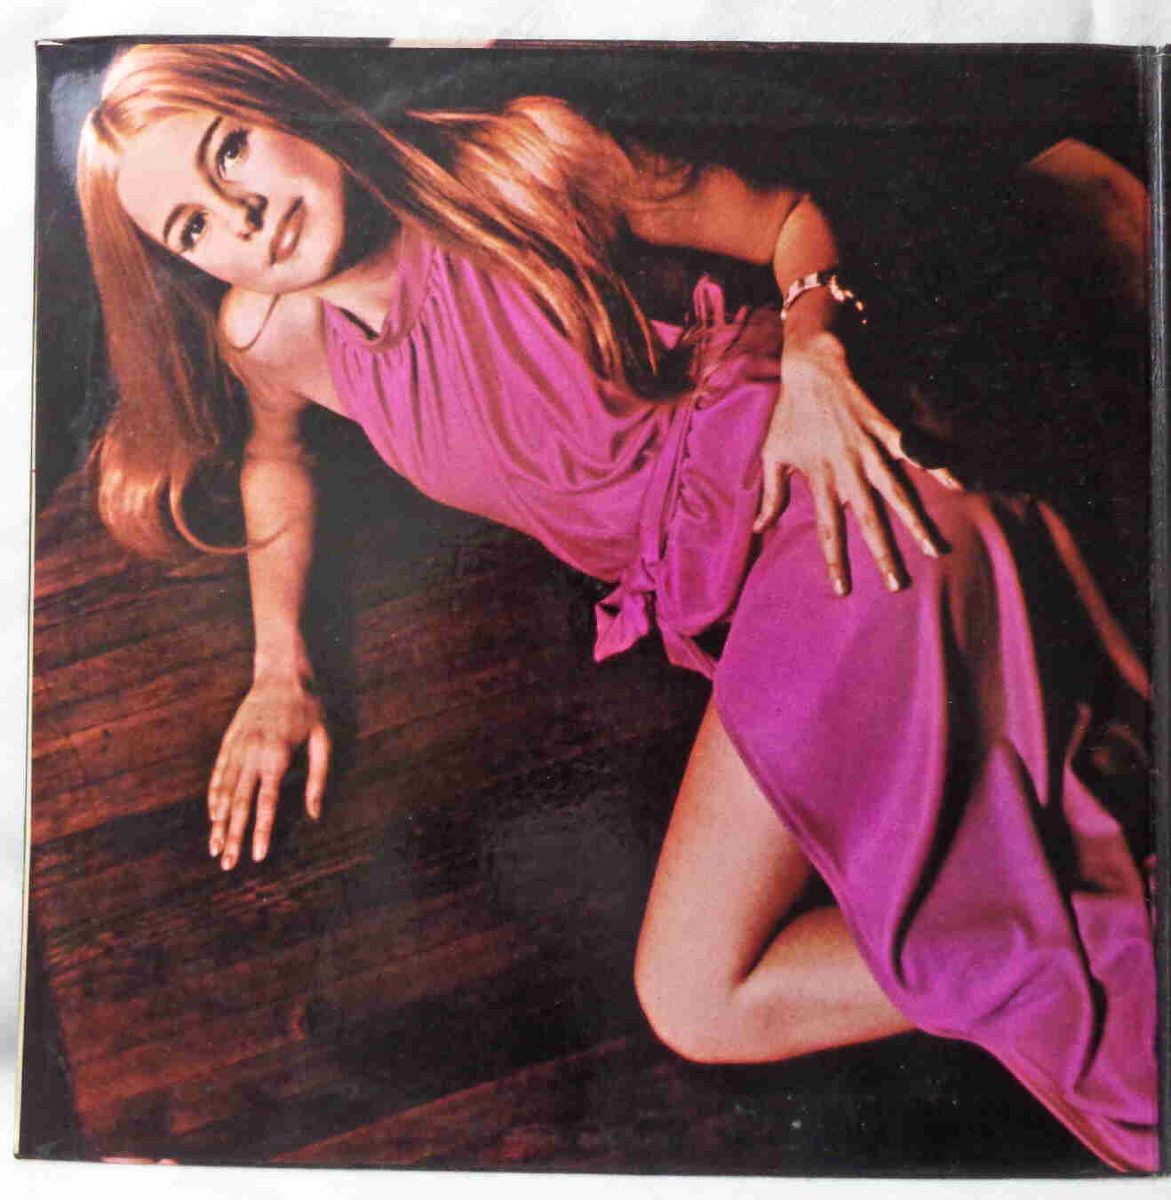 Beverly Bremers Lp I´ll Make You Music 1972 Capa Dupla R 30 00 Em